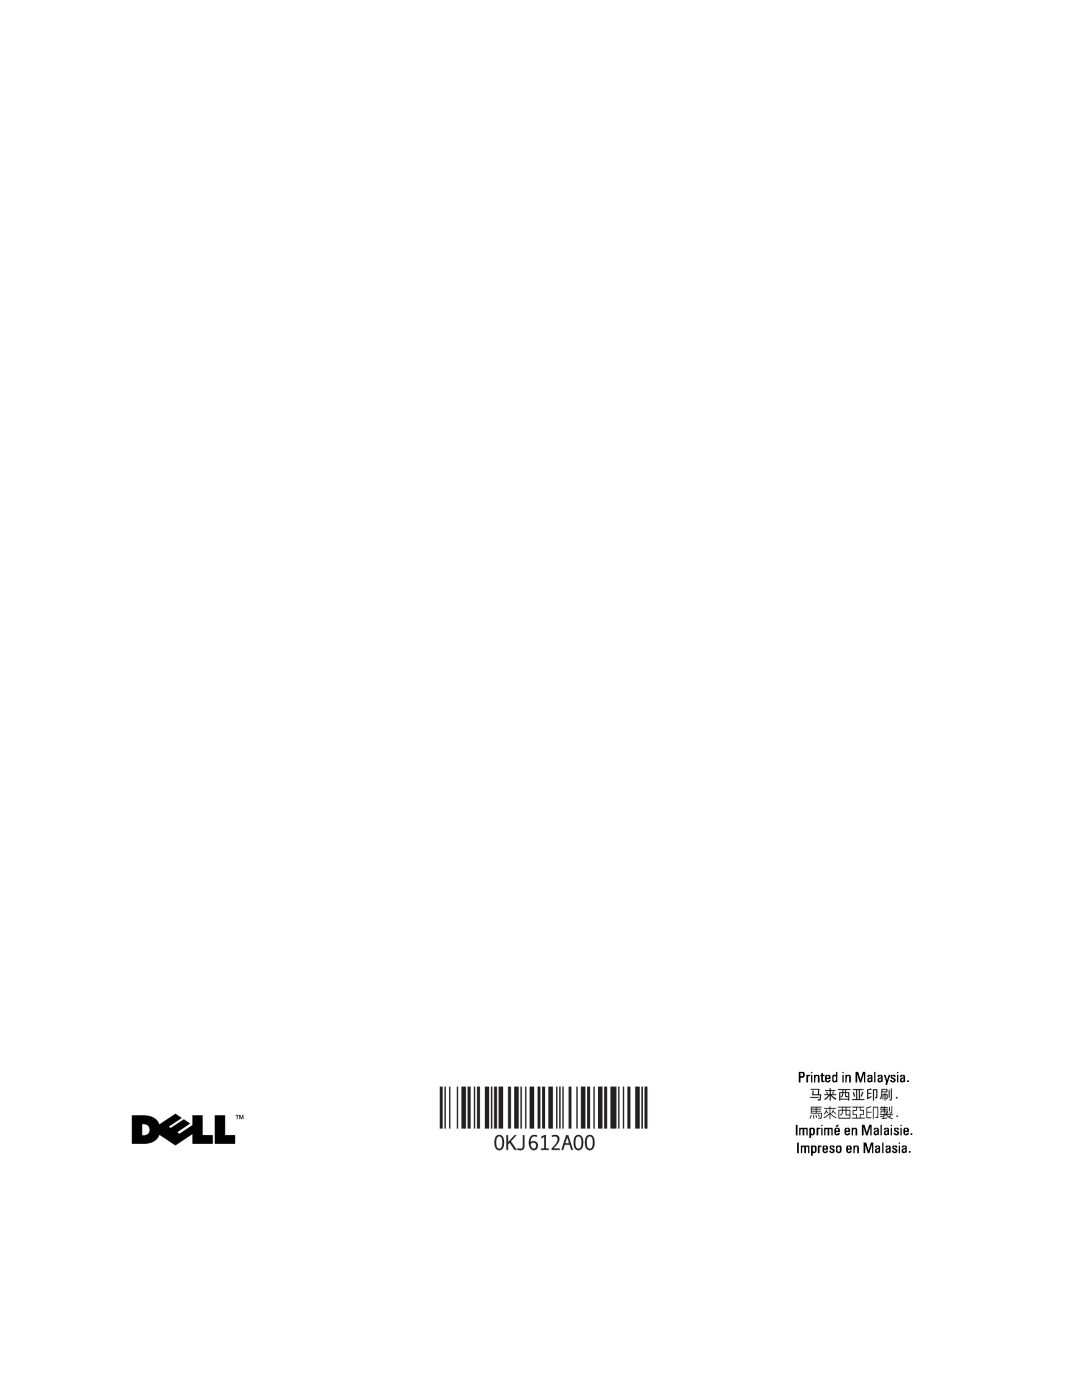 Dell Model PR09S setup guide Printed in Malaysia, 馬來西亞印製 